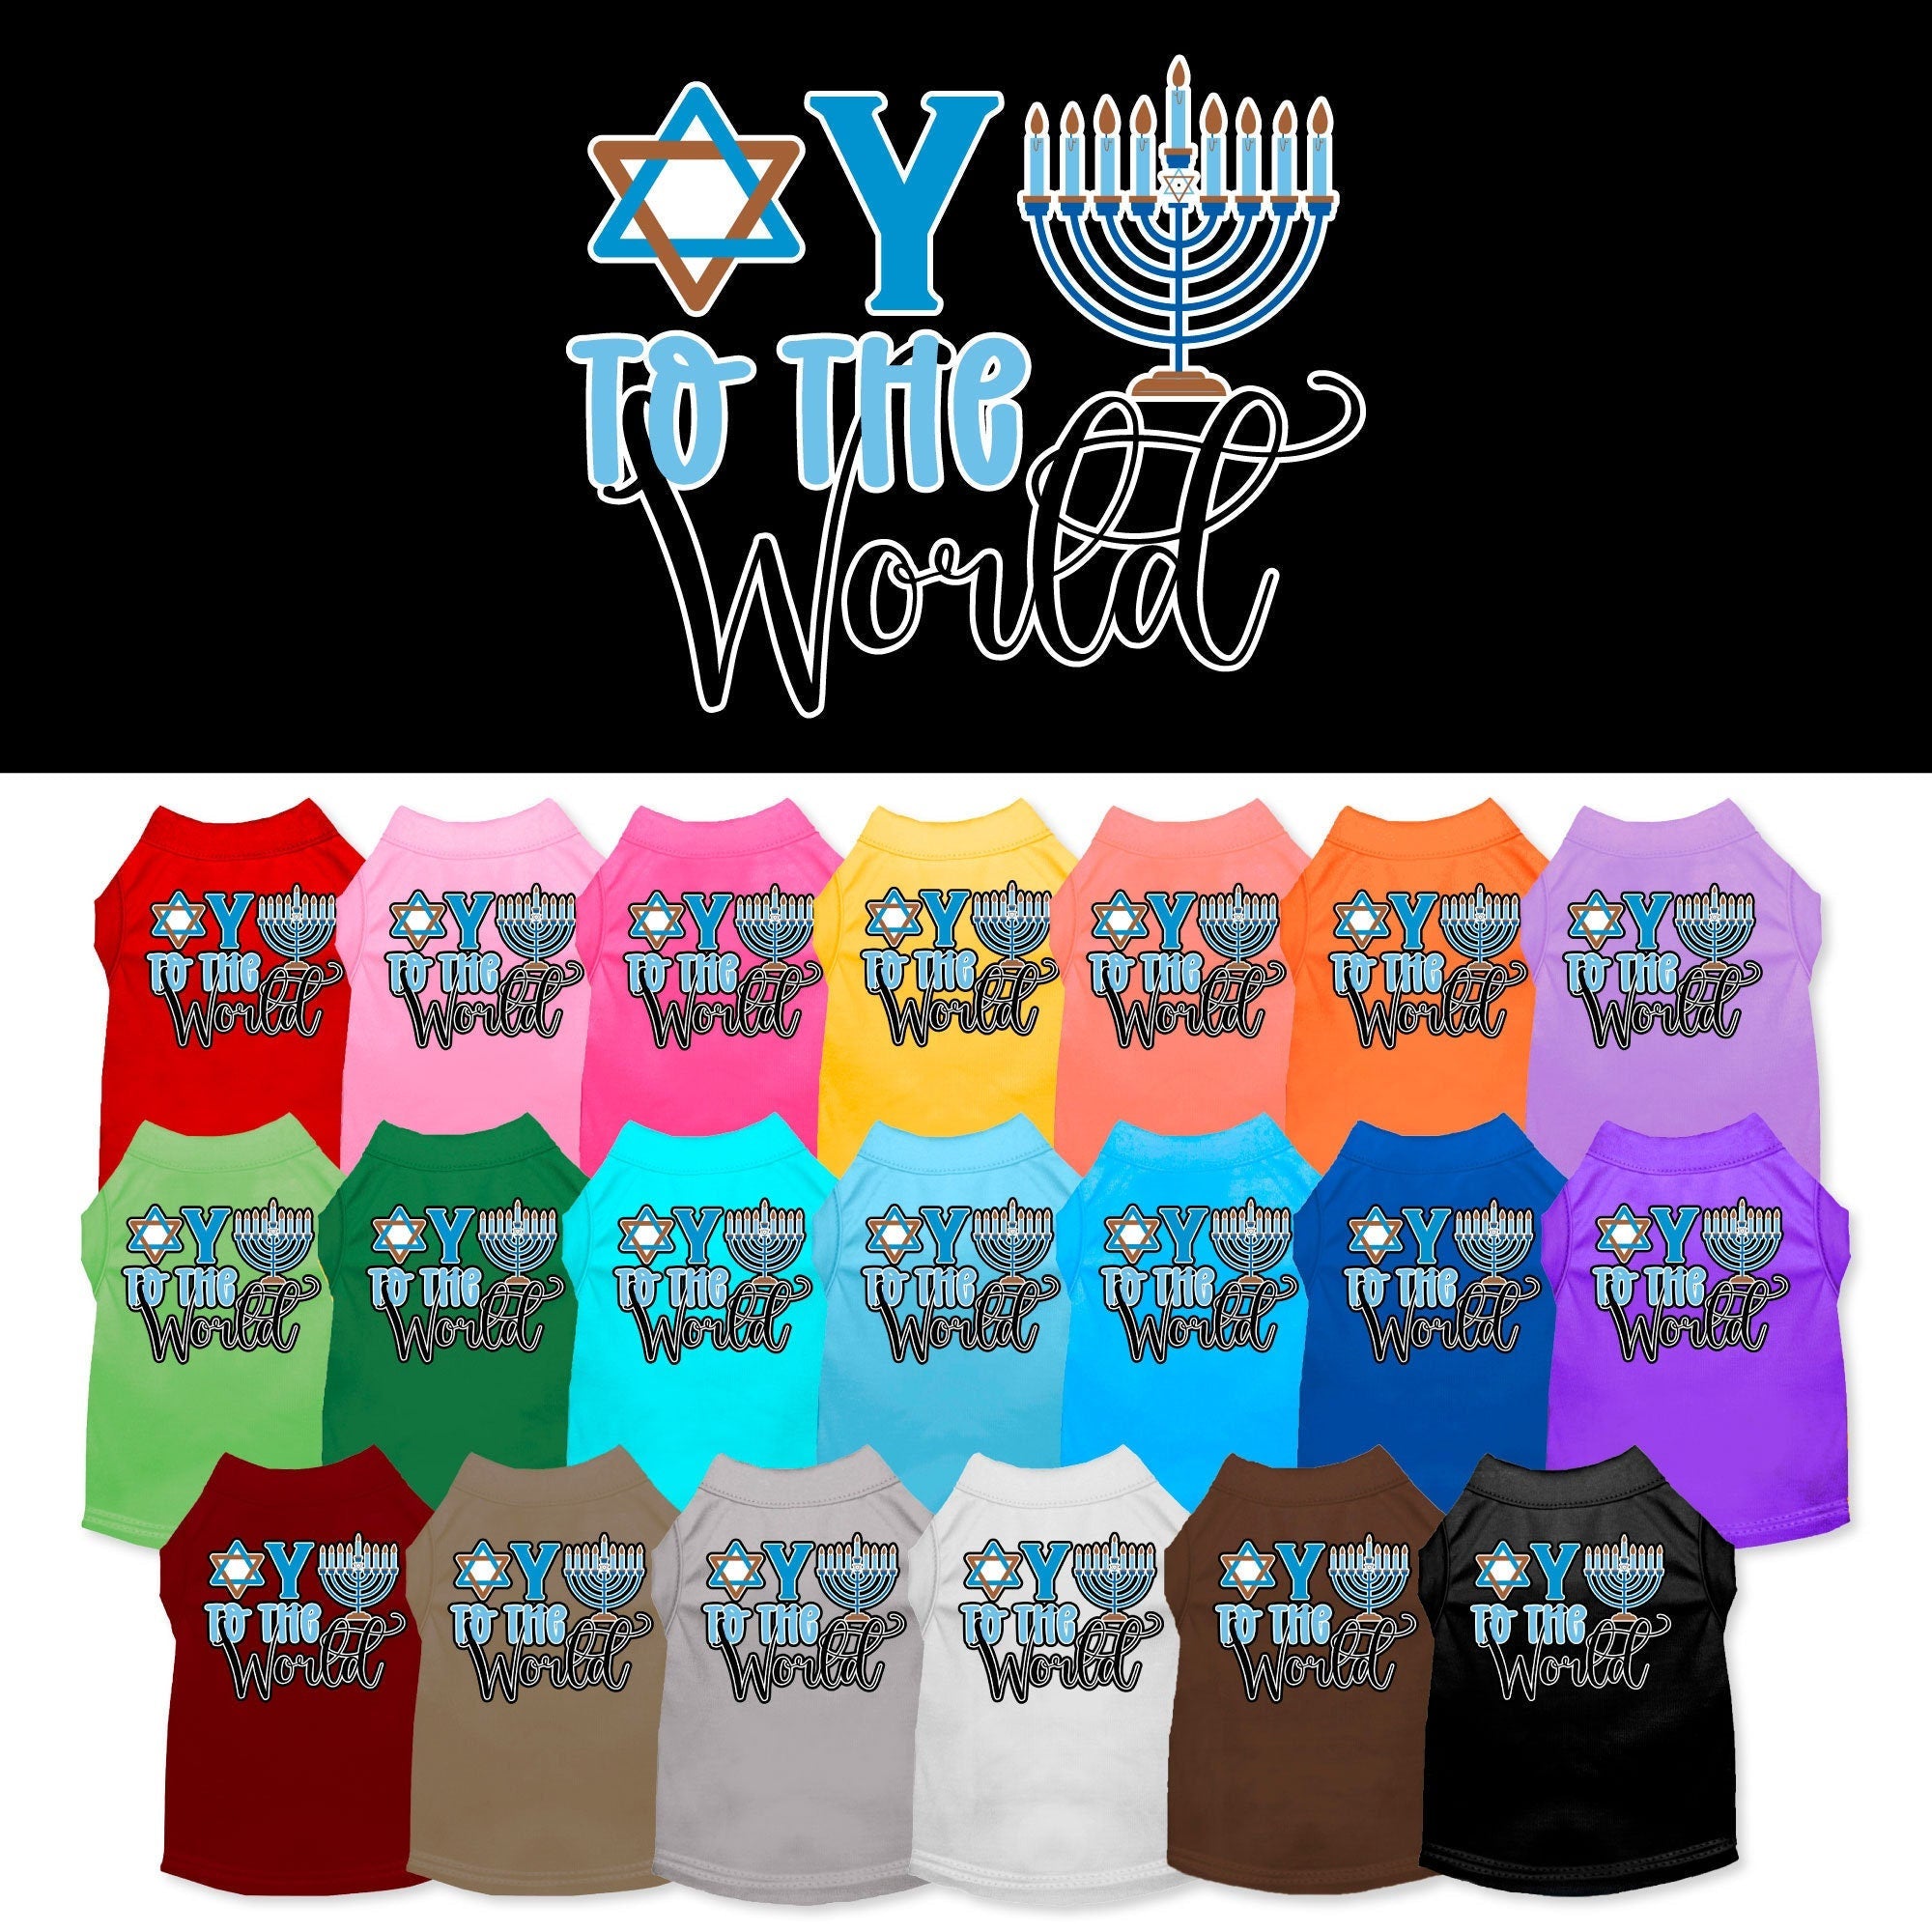 Hanukkah Pet Dog and Cat Shirt Screen Printed, "Oy To The World"